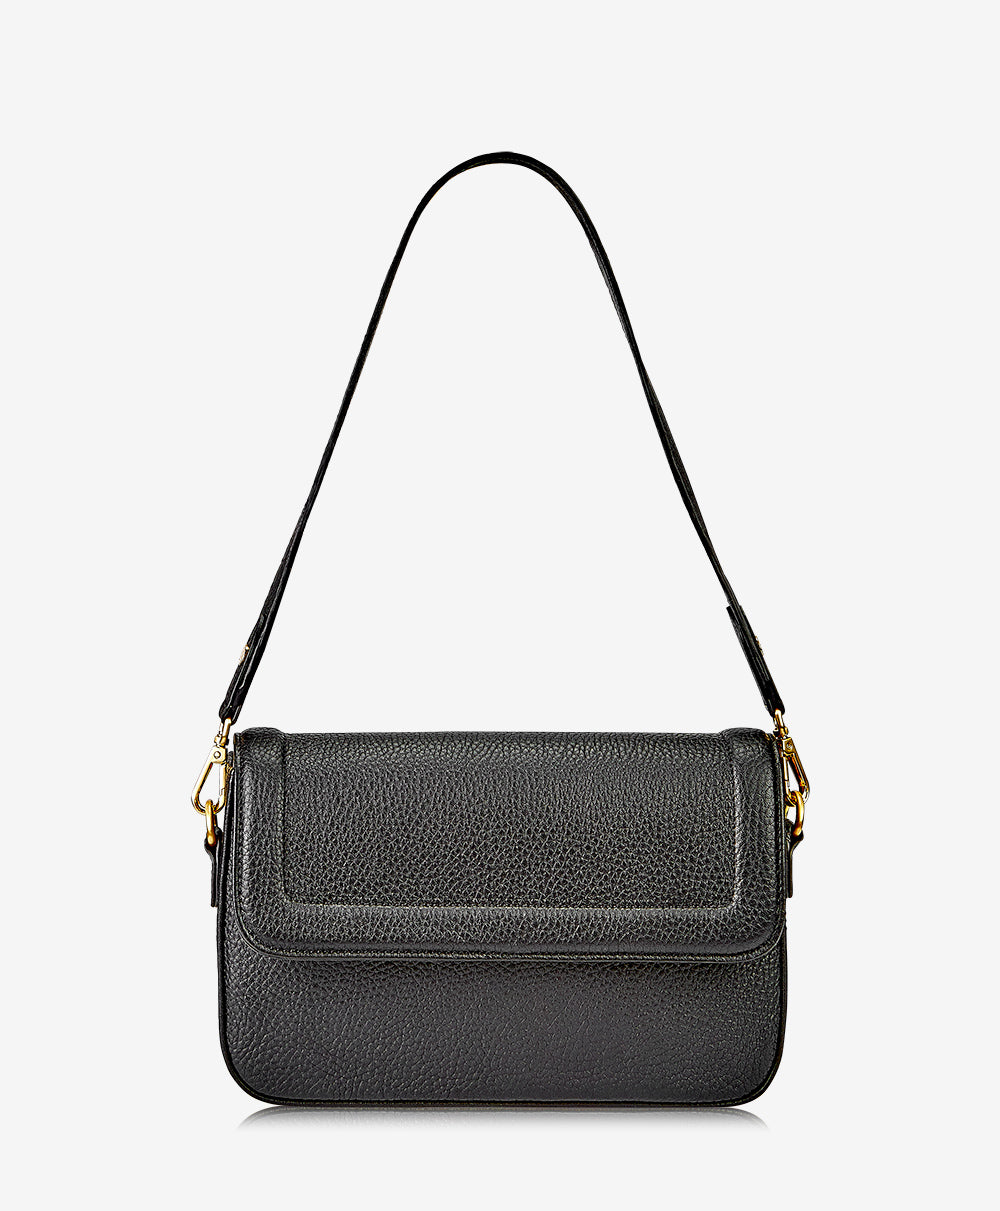 Margot New York Crossbody Genuine Leather Small Handbag Pocket 